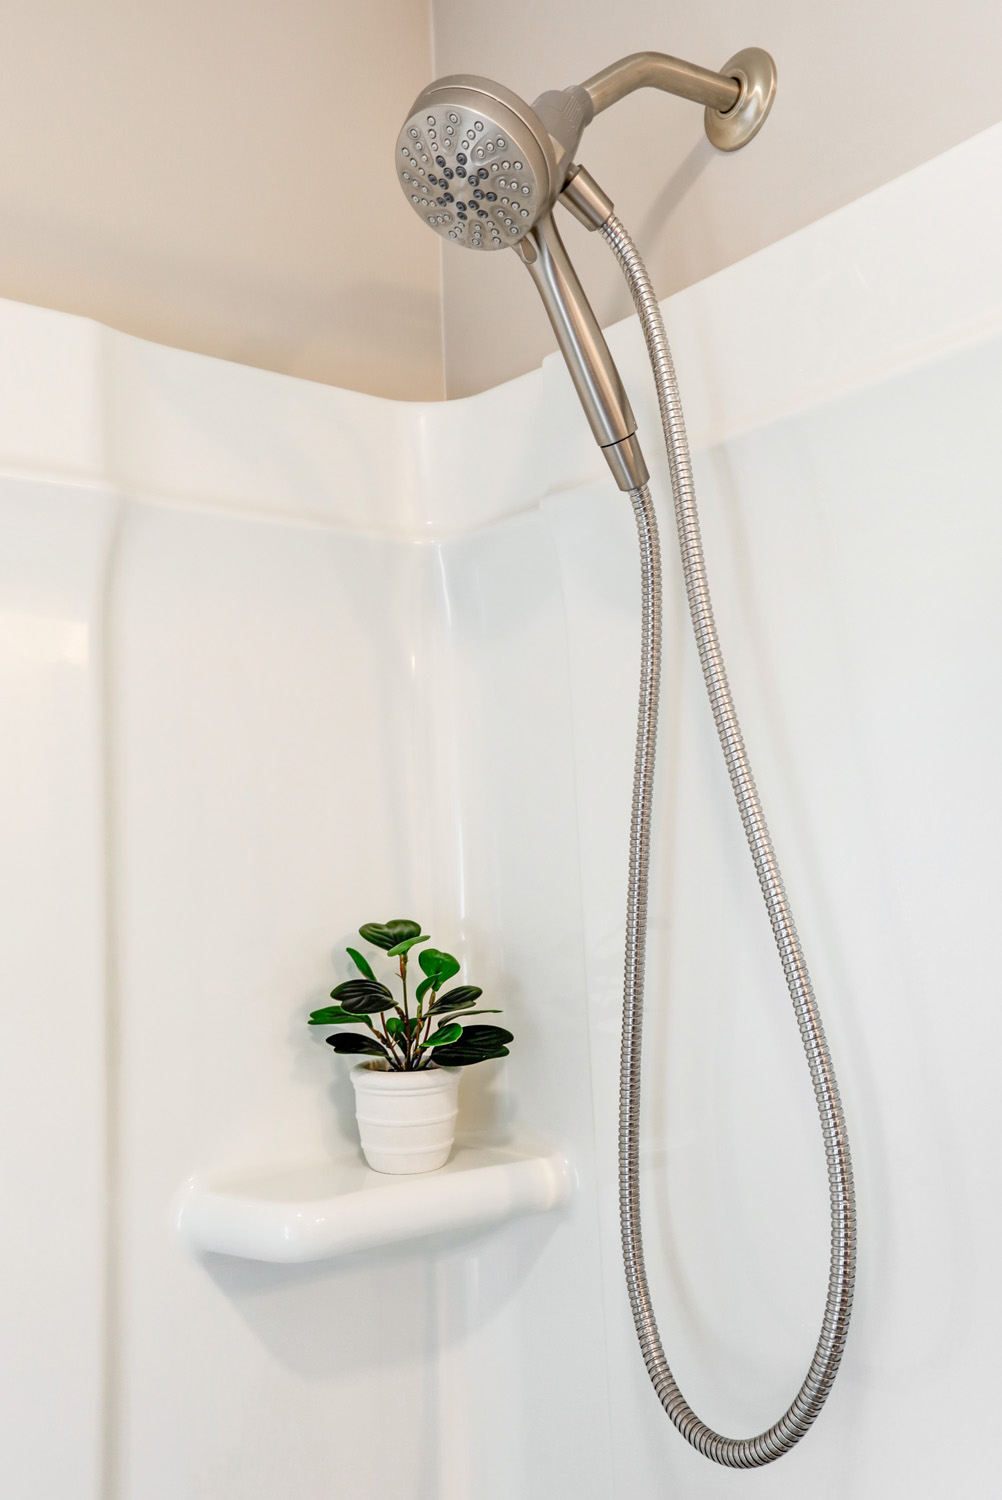 Brushed Nickel shower head in Manheim Township Bathroom Remodel 